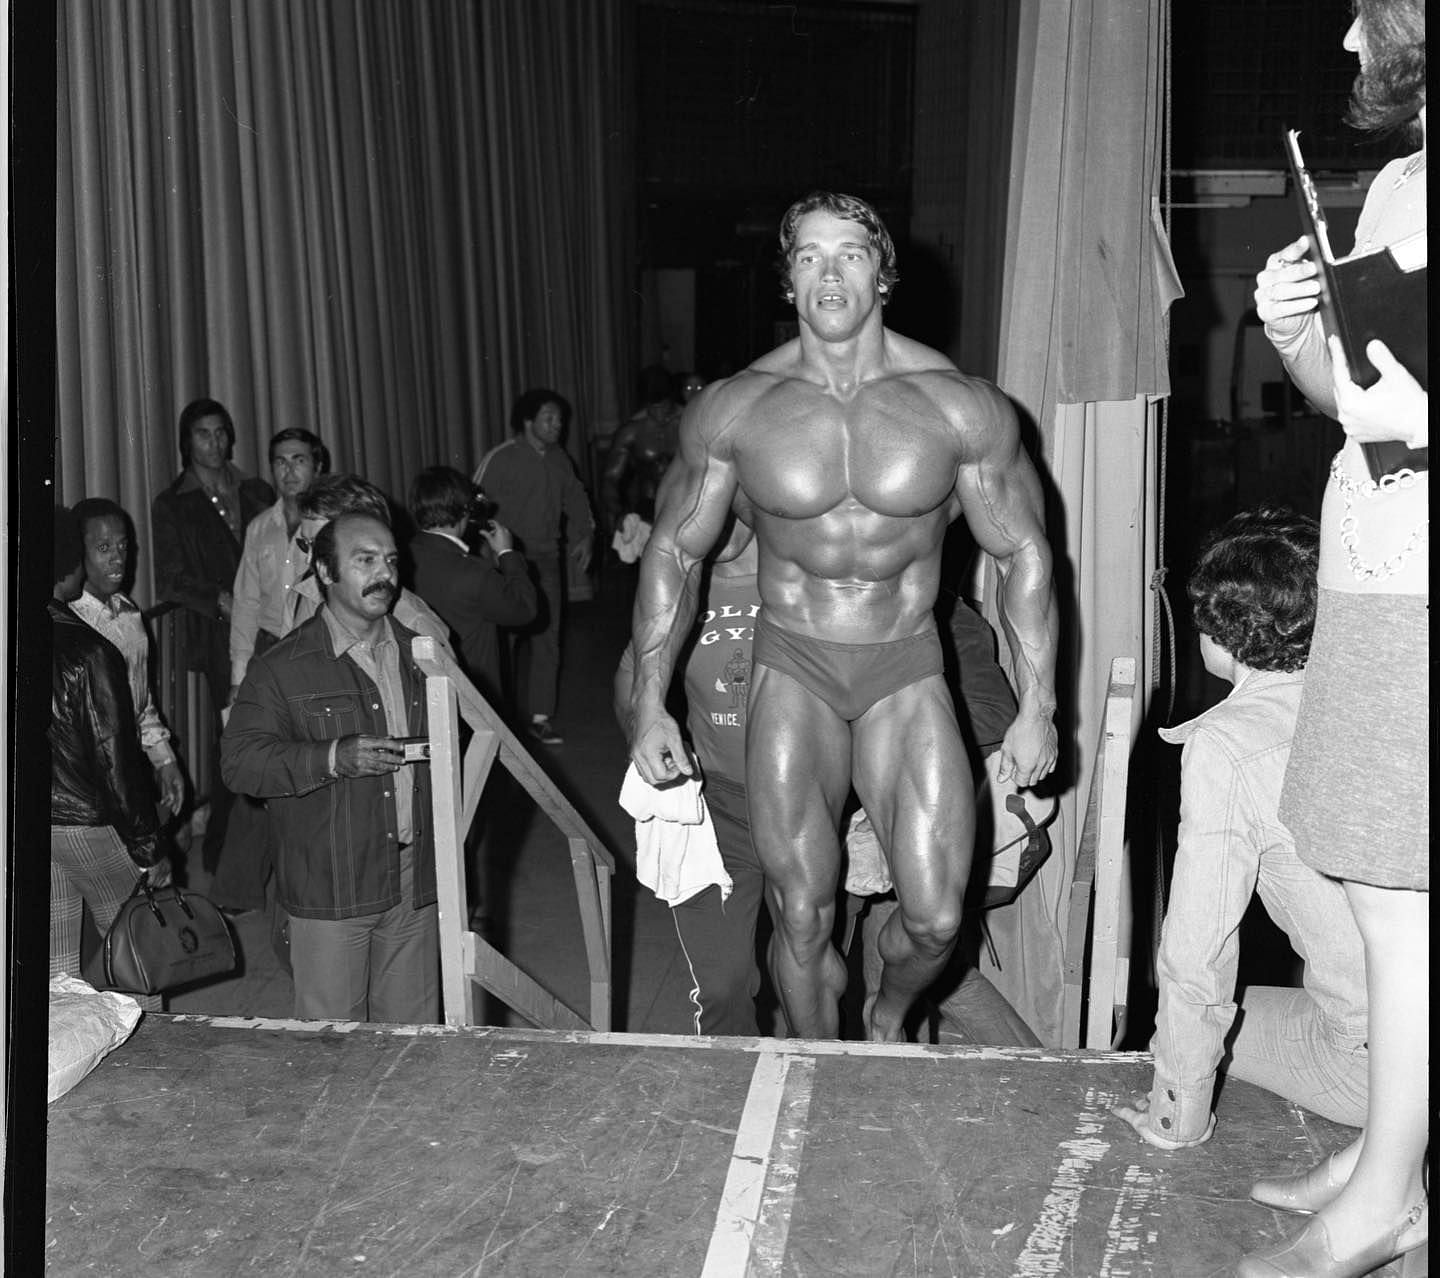 How many times Arnold Schwarzenegger won Mr. Olympia?